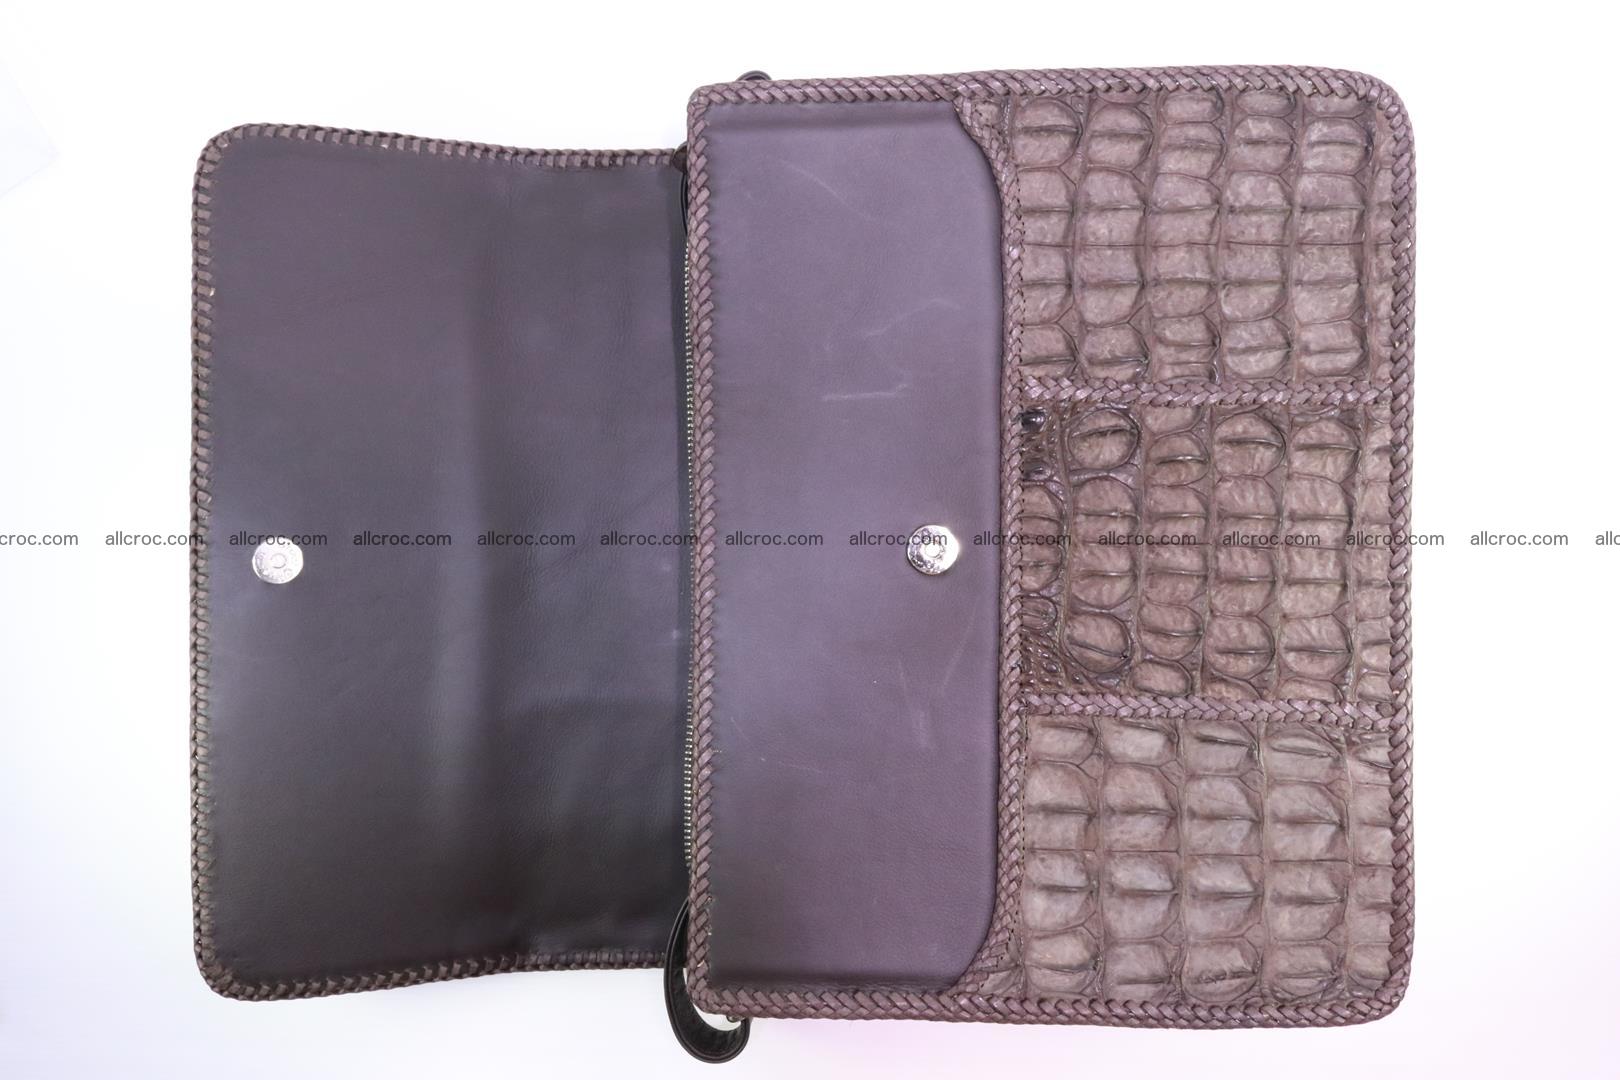 Crocodile skin shoulder bag with braided edges 145 Foto 8